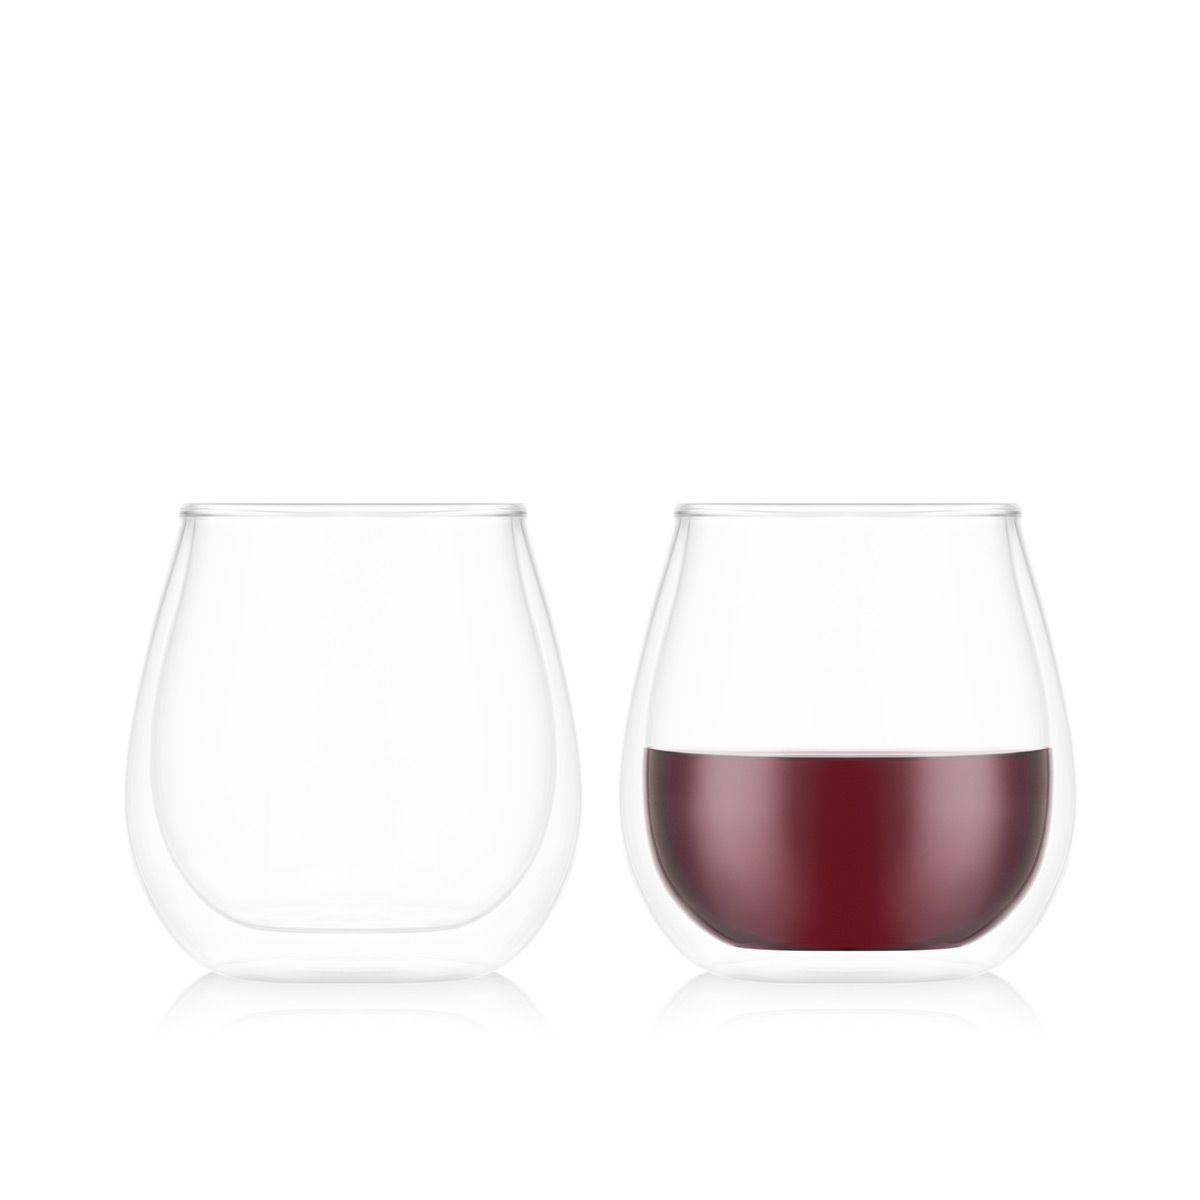 Bodum skål dubbla väggglasögon 2 st., Pinot 0,5 l